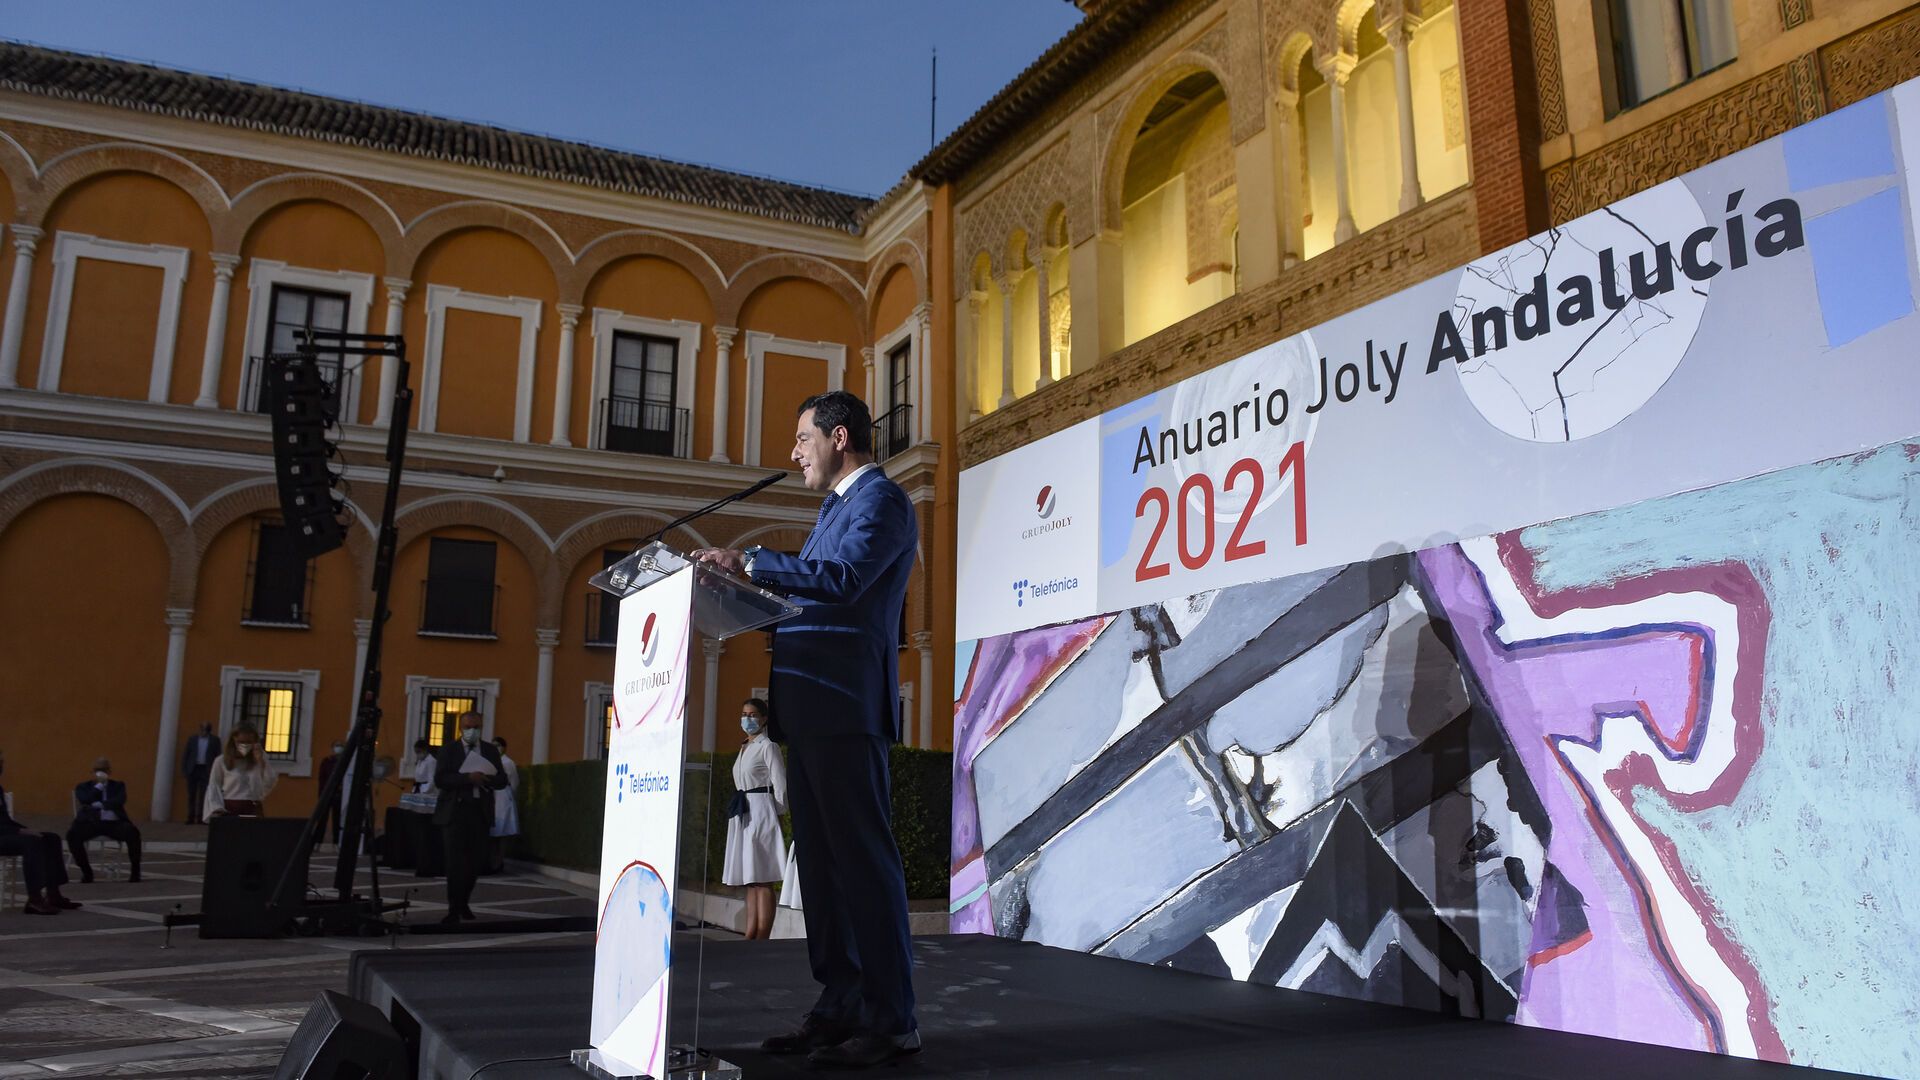 Anuario Joly Andaluc&iacute;a 2021